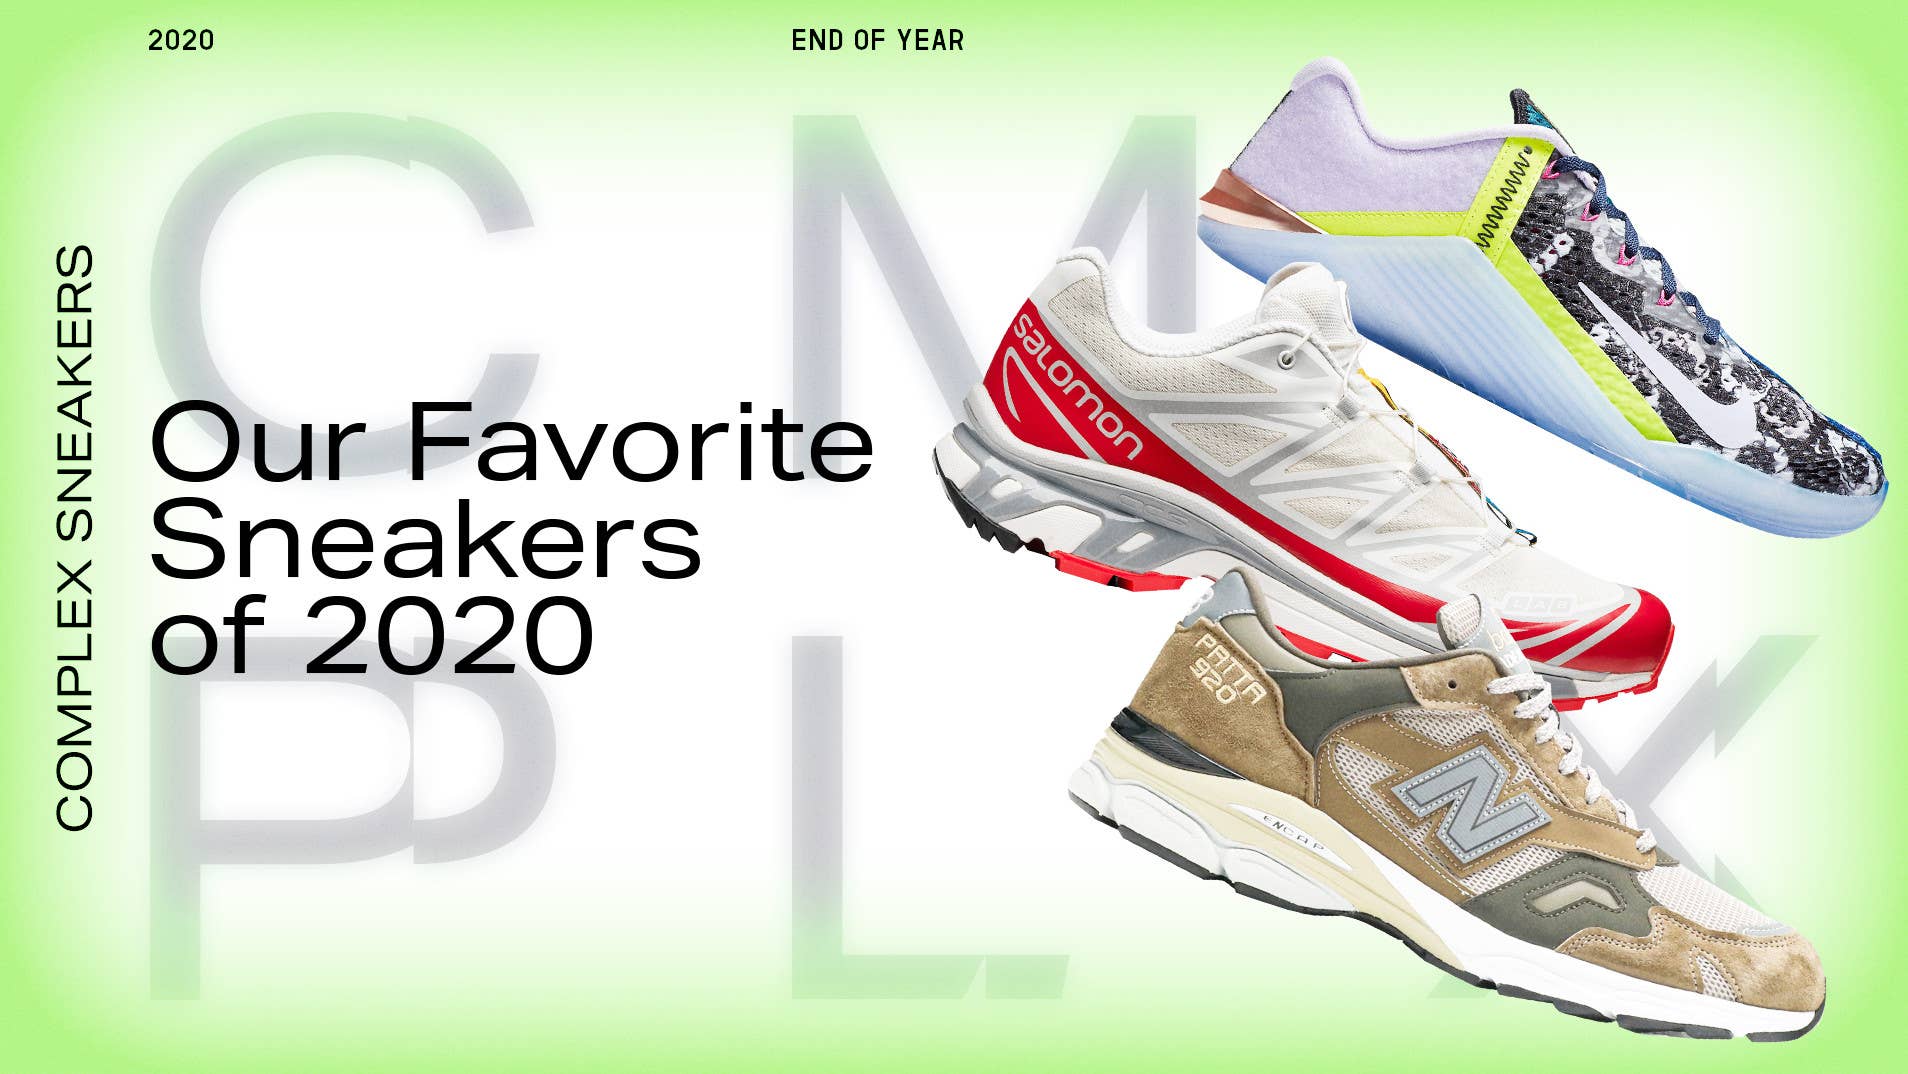 Favorite Sneakers of 2020